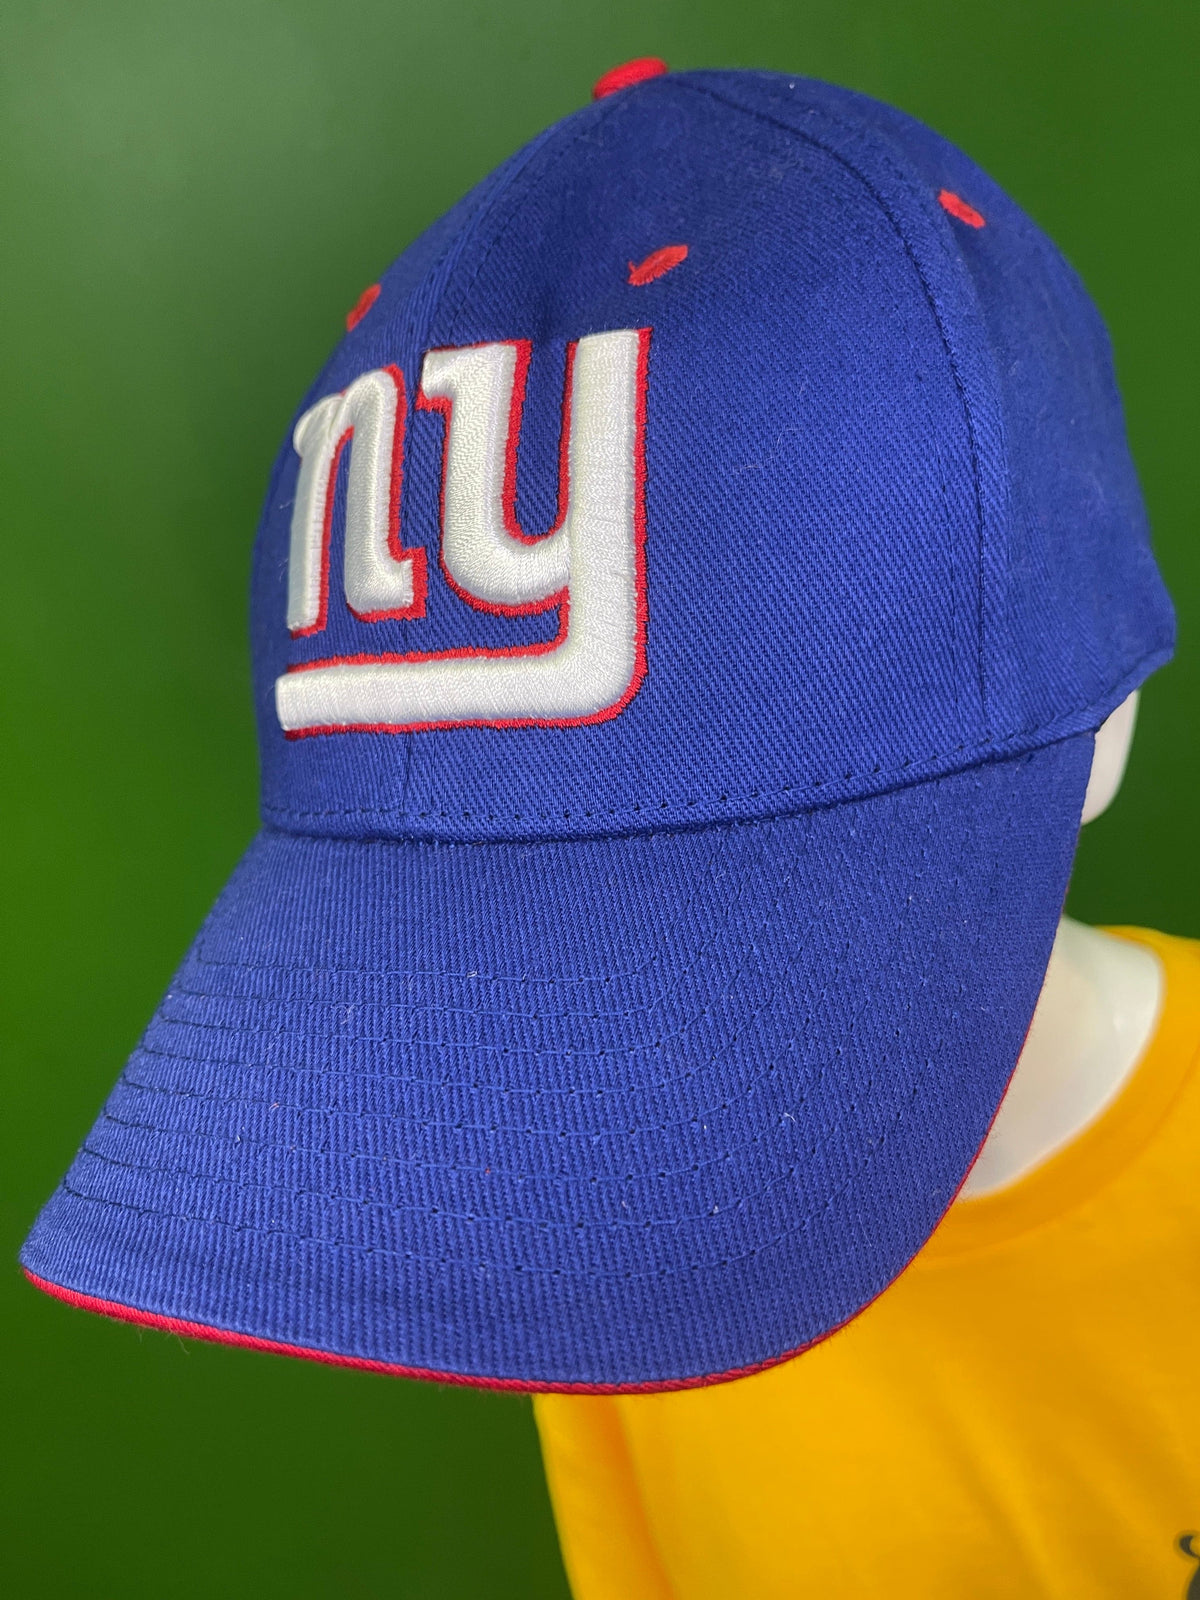 NFL New York Giants Strapback Hat/Cap OSFM